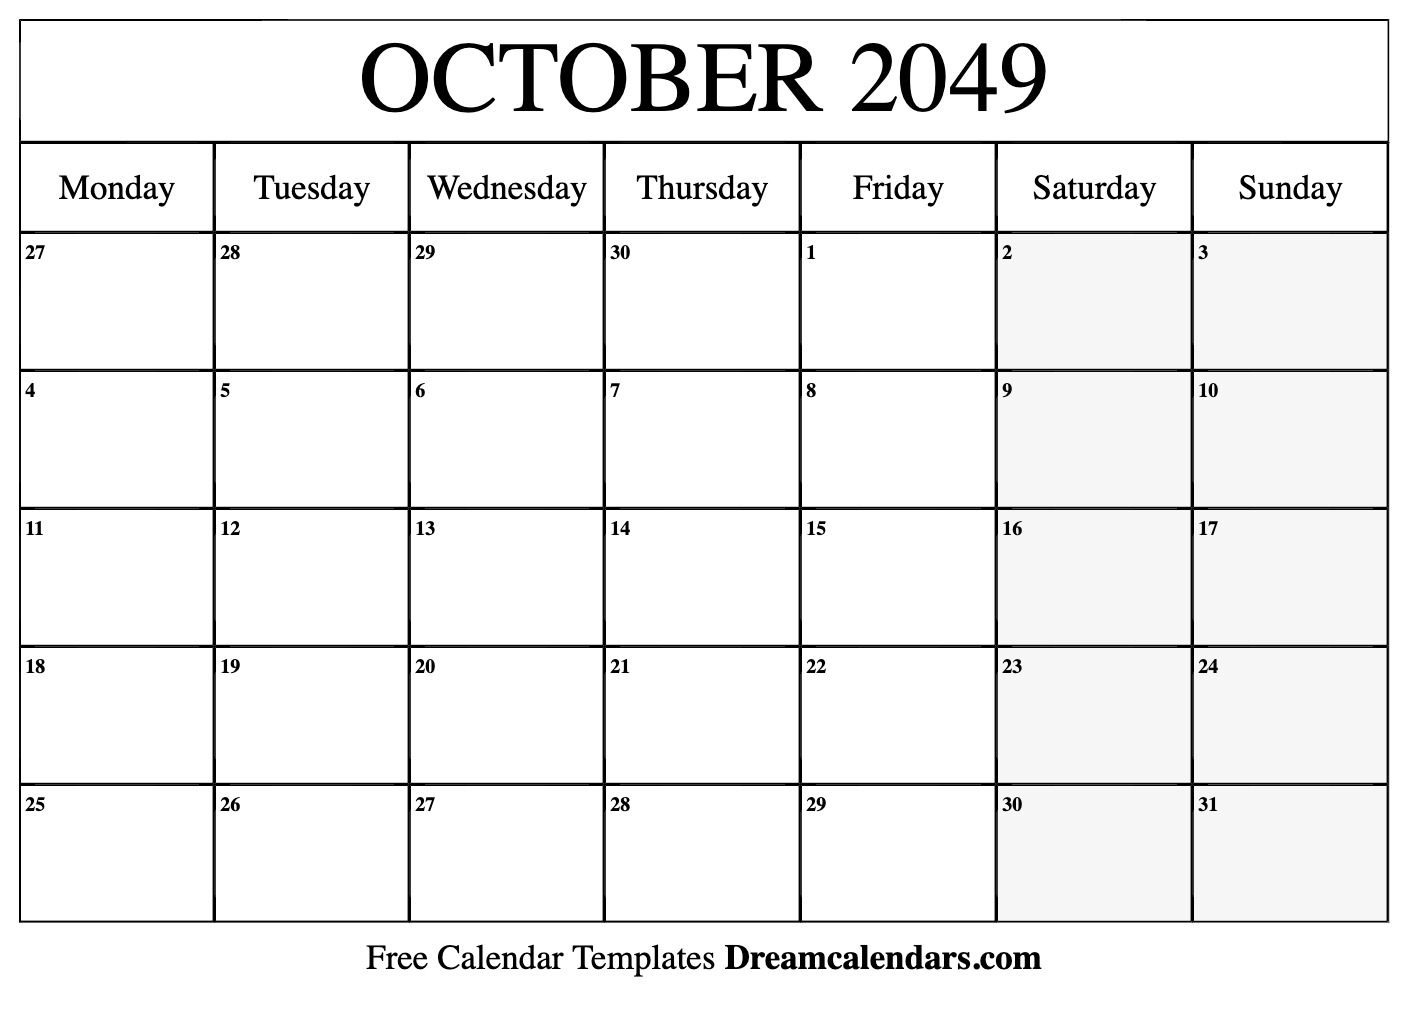 October 2049 Calendar Free Blank Printable Templates